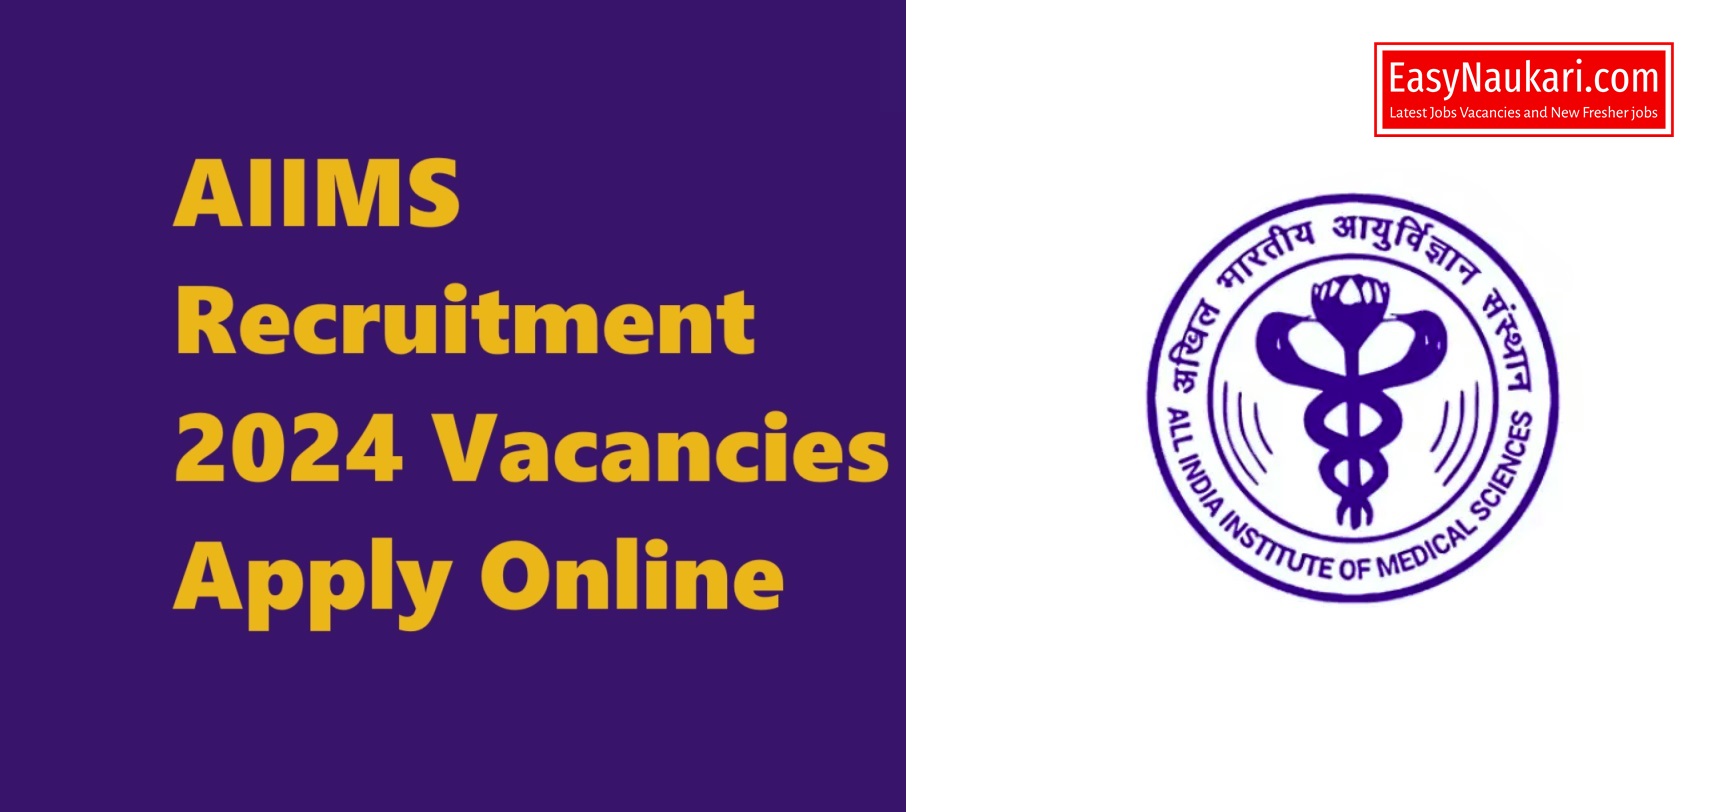 Aiims Recruitment Vacancies Apply Online 2024 